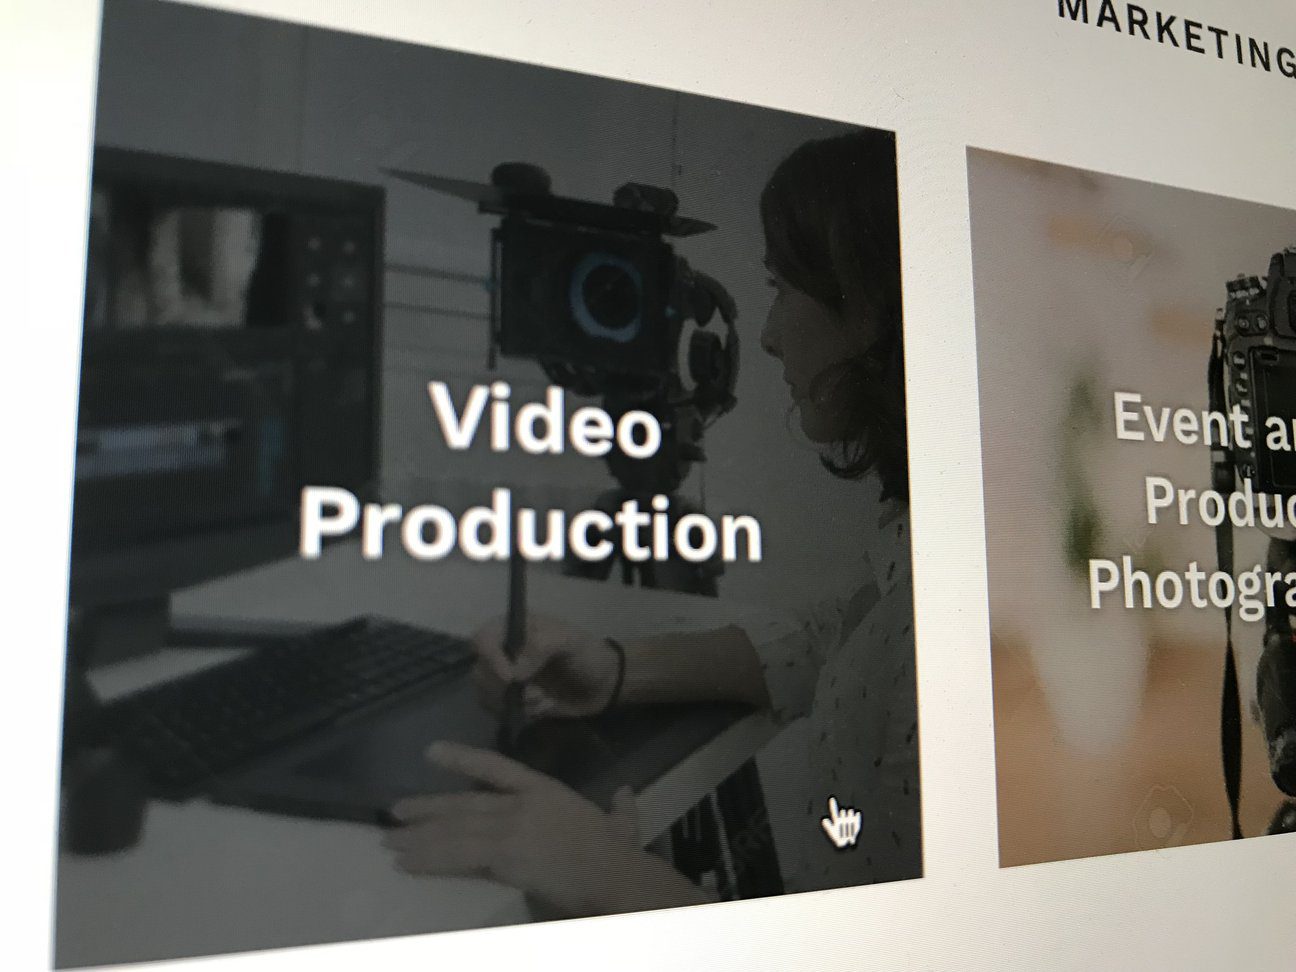 Video Product screenshot